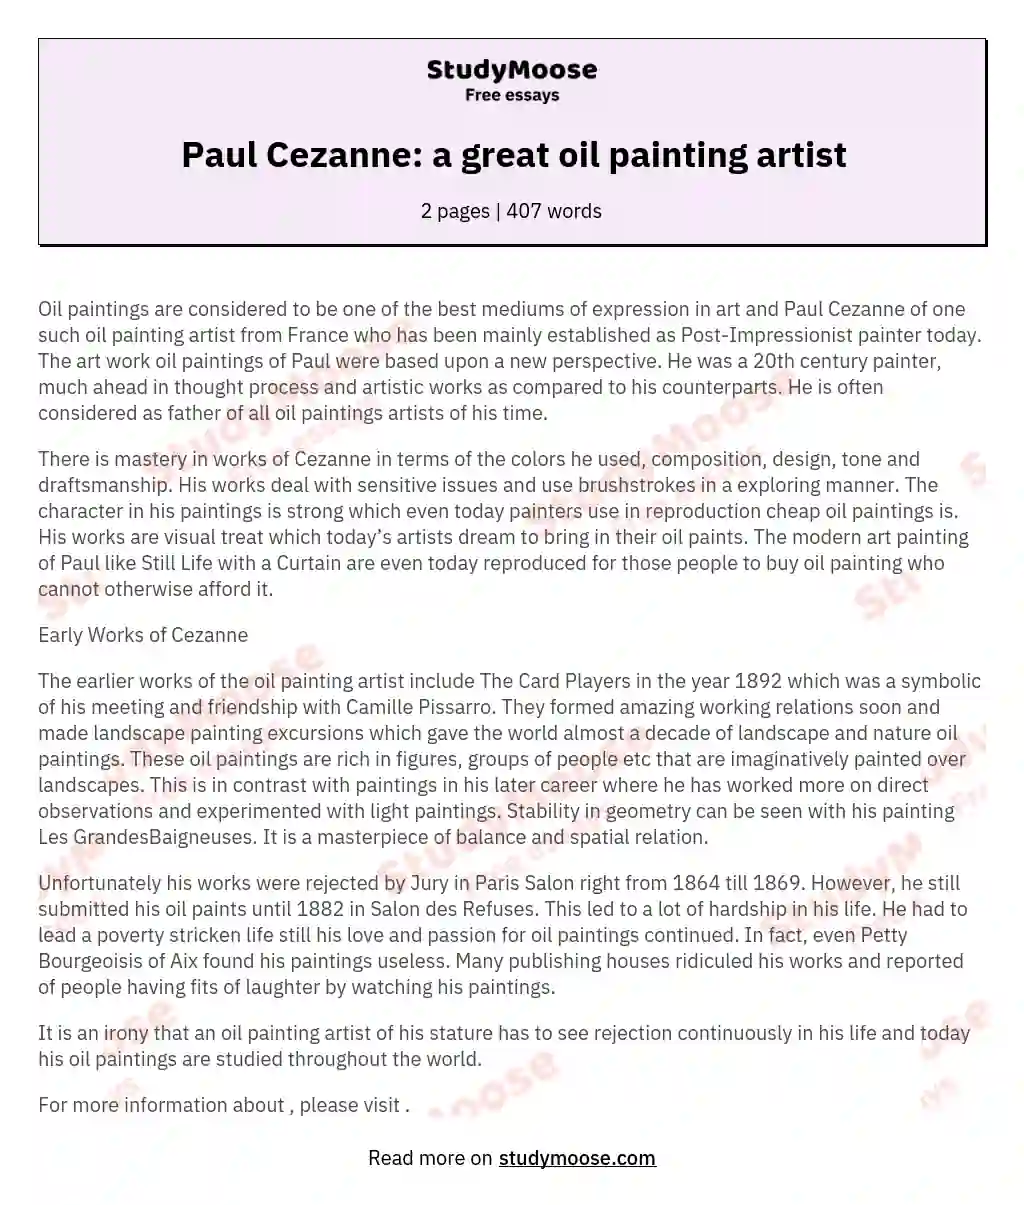 Paul Cezanne: a great oil painting artist